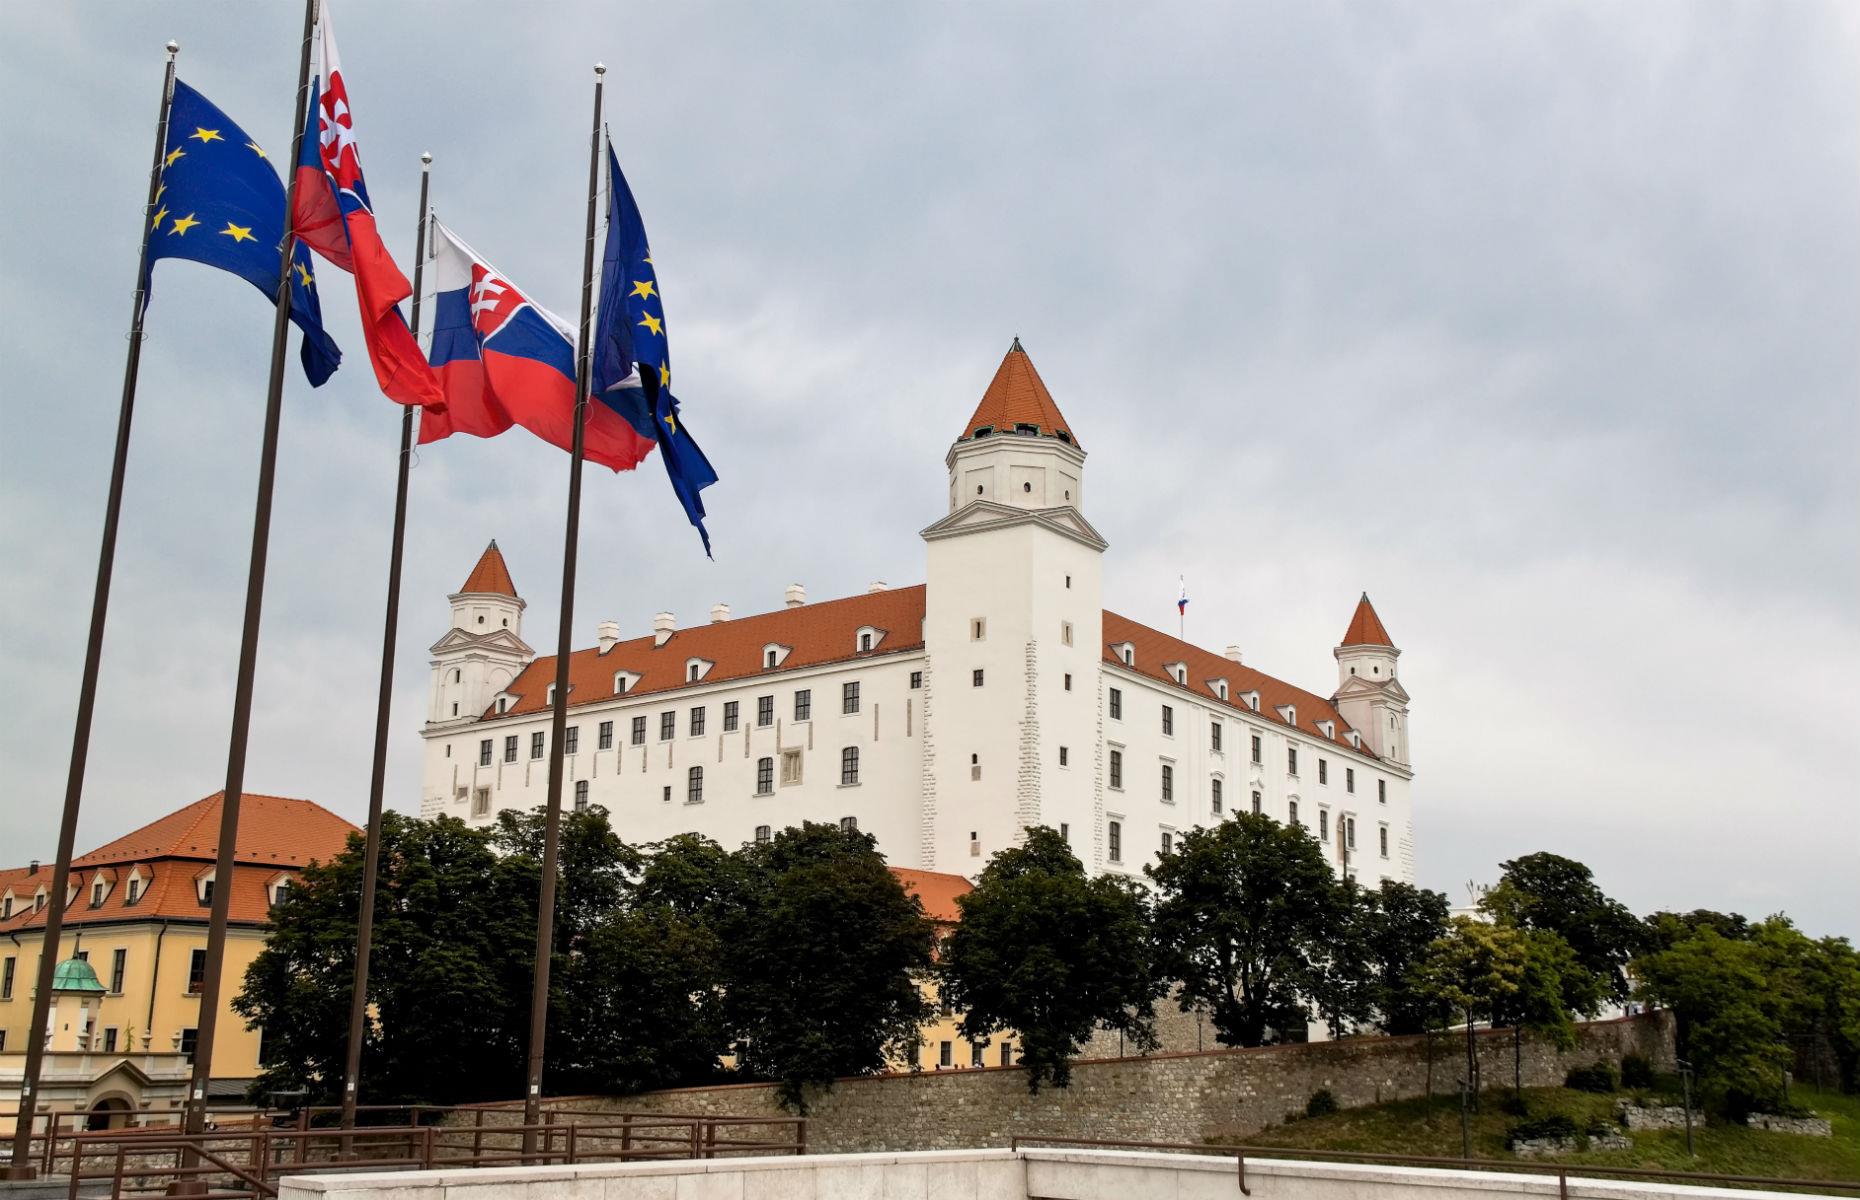 Slovak Republic: $29.3 billion (£21.47bn)